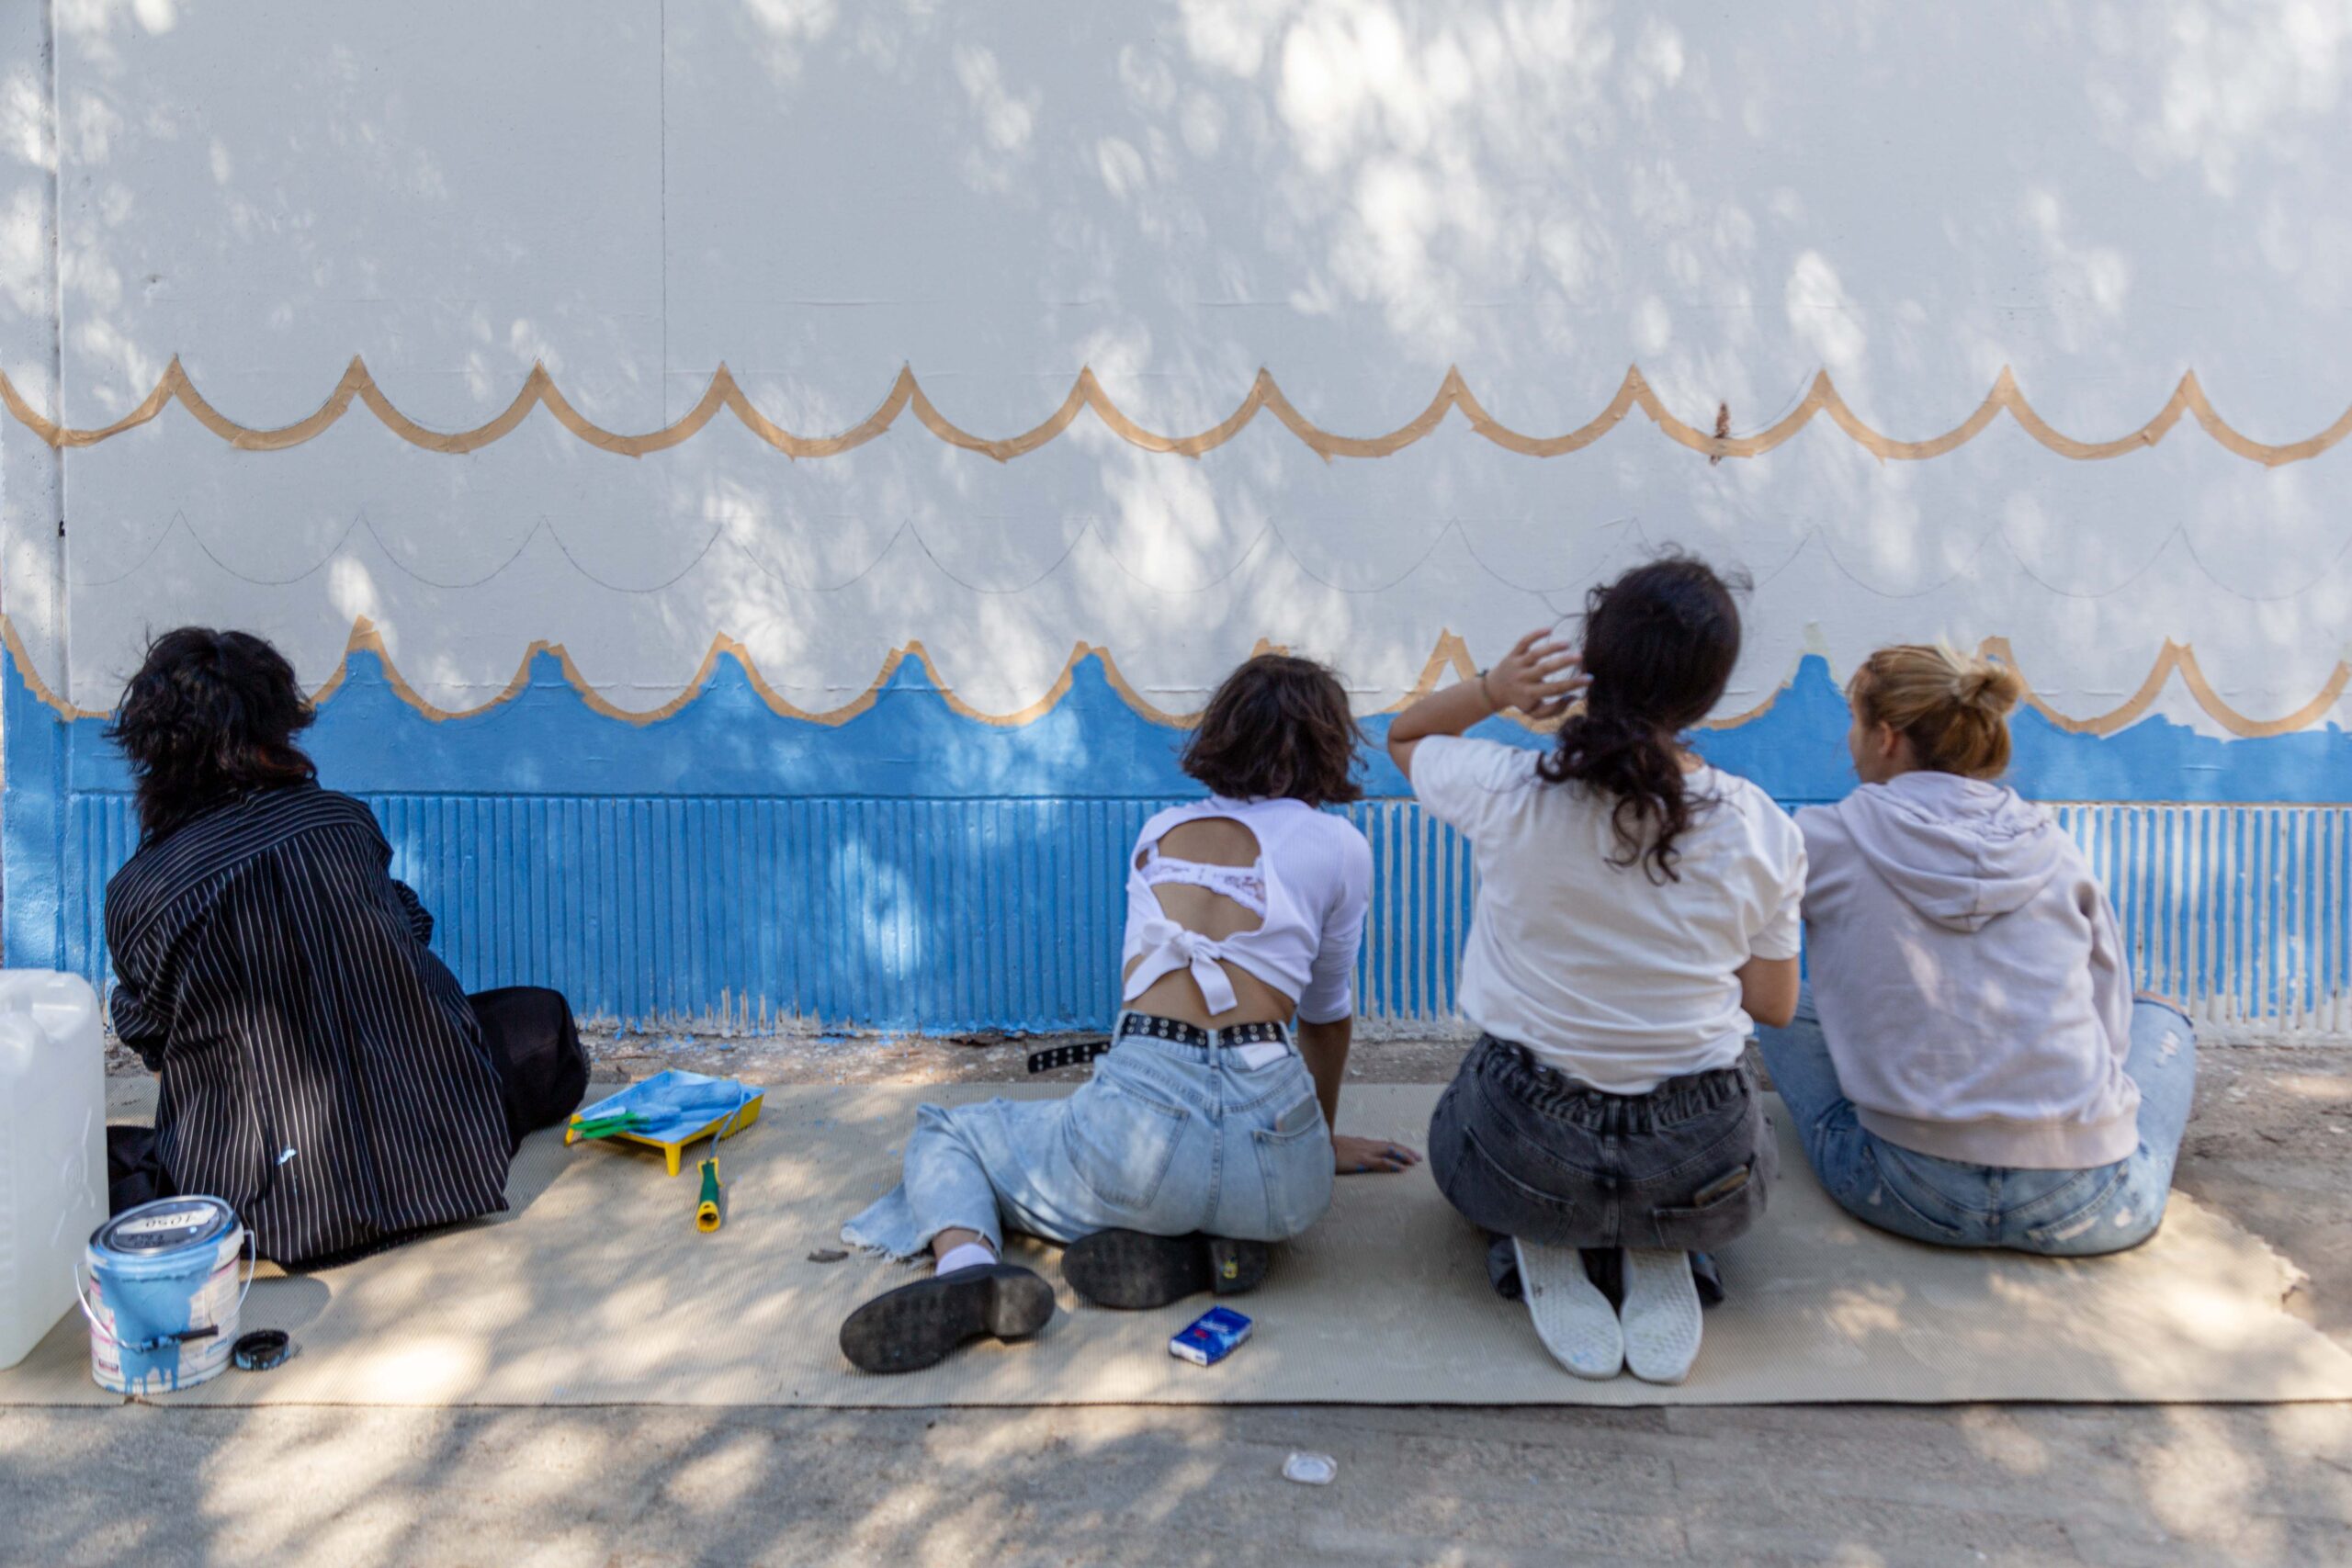 Students working at Mara Damiani "La mia città" mural